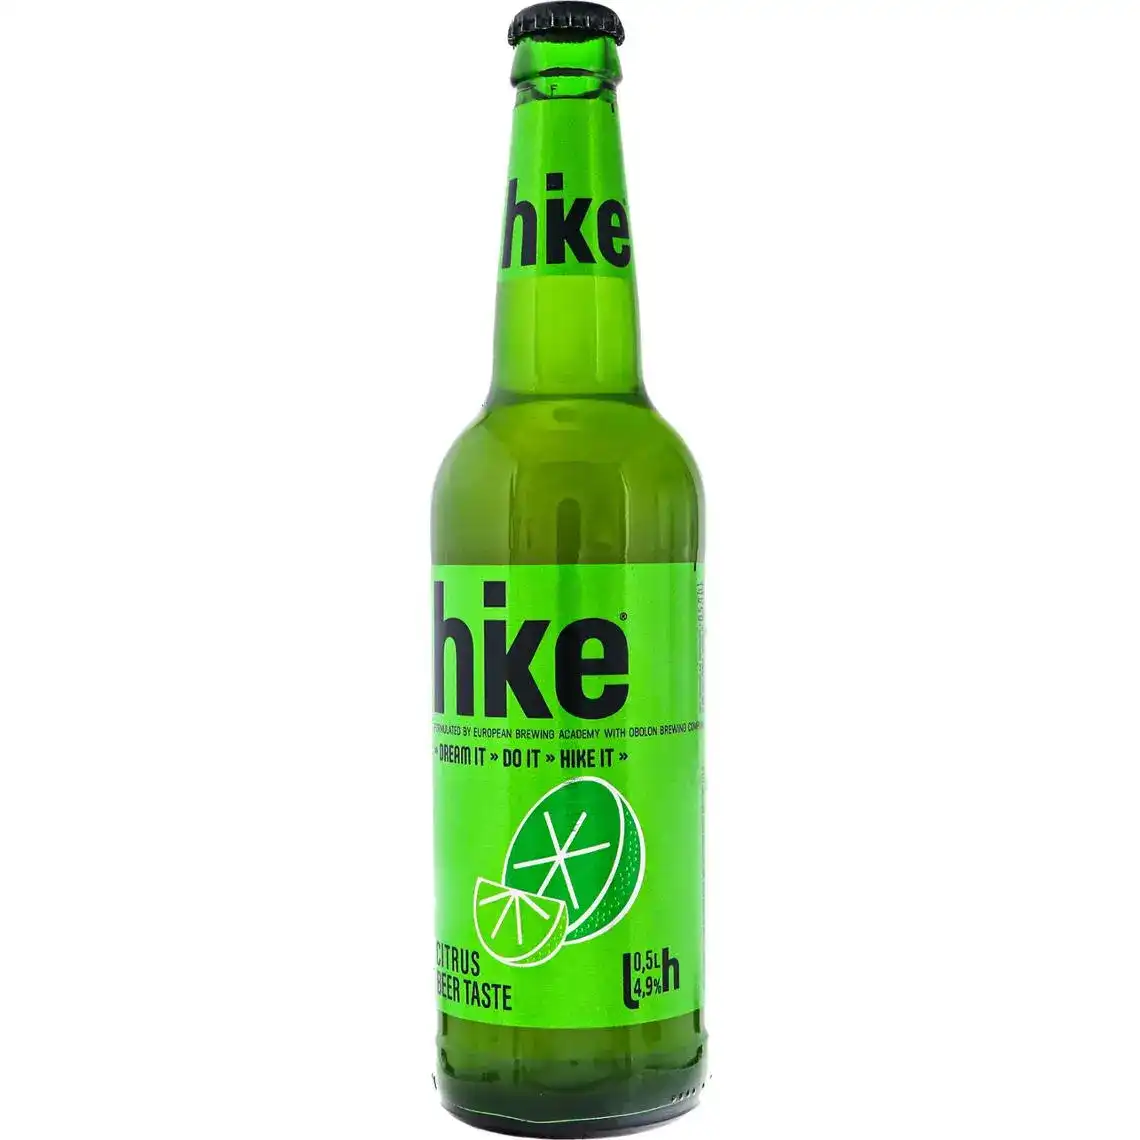 Пиво спеціальне Hike Citrus пастеризоване 4.9% 0.5 л